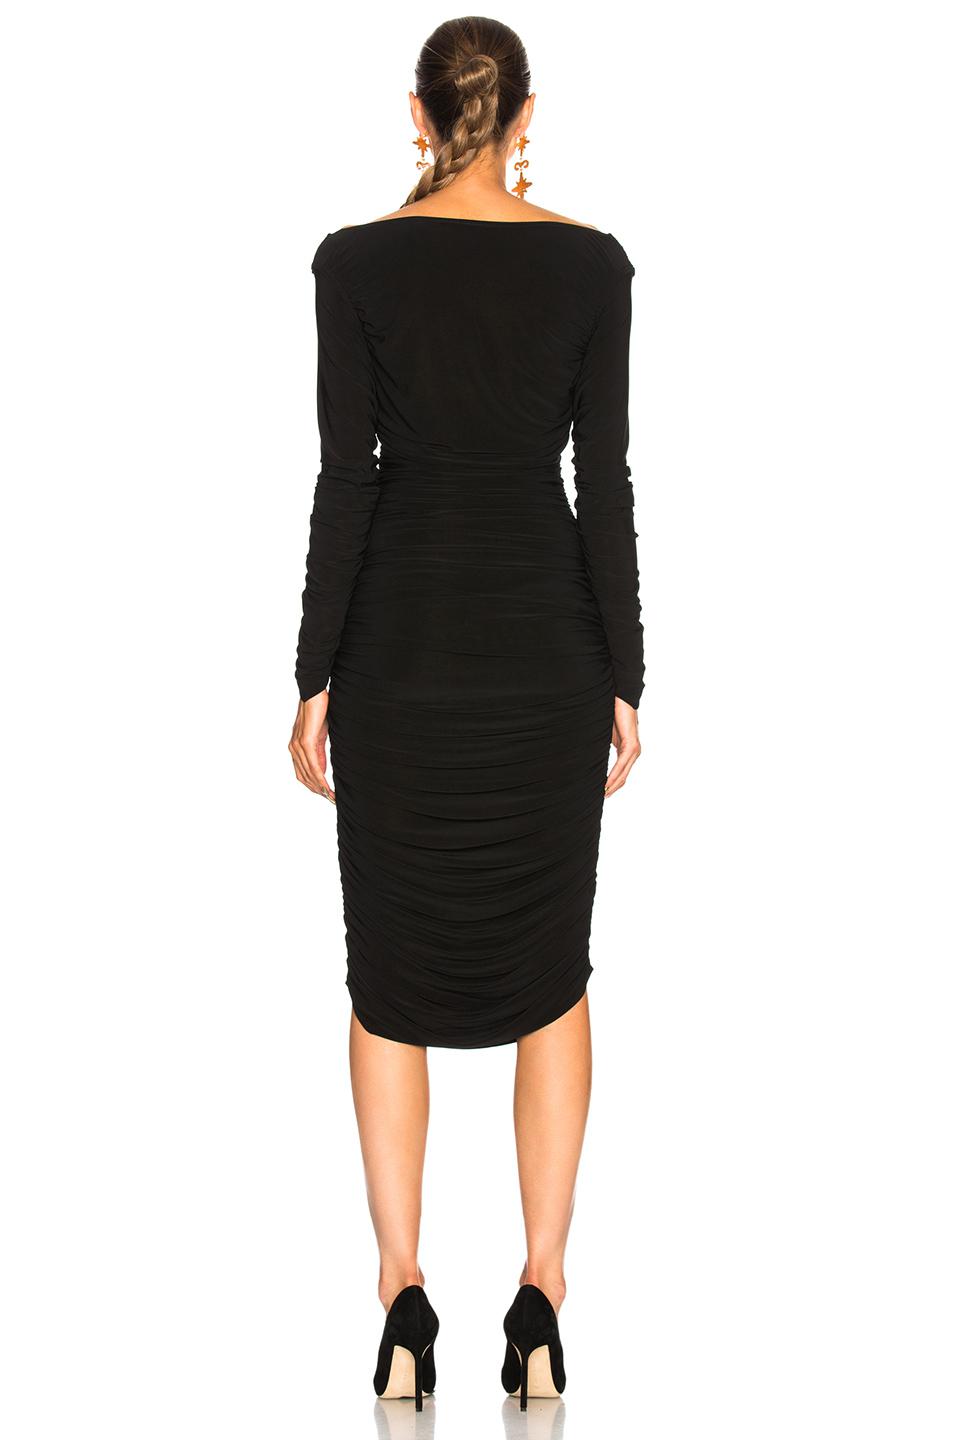 Norma Kamali Synthetic Long Sleeve Tara Dress in Black - Lyst